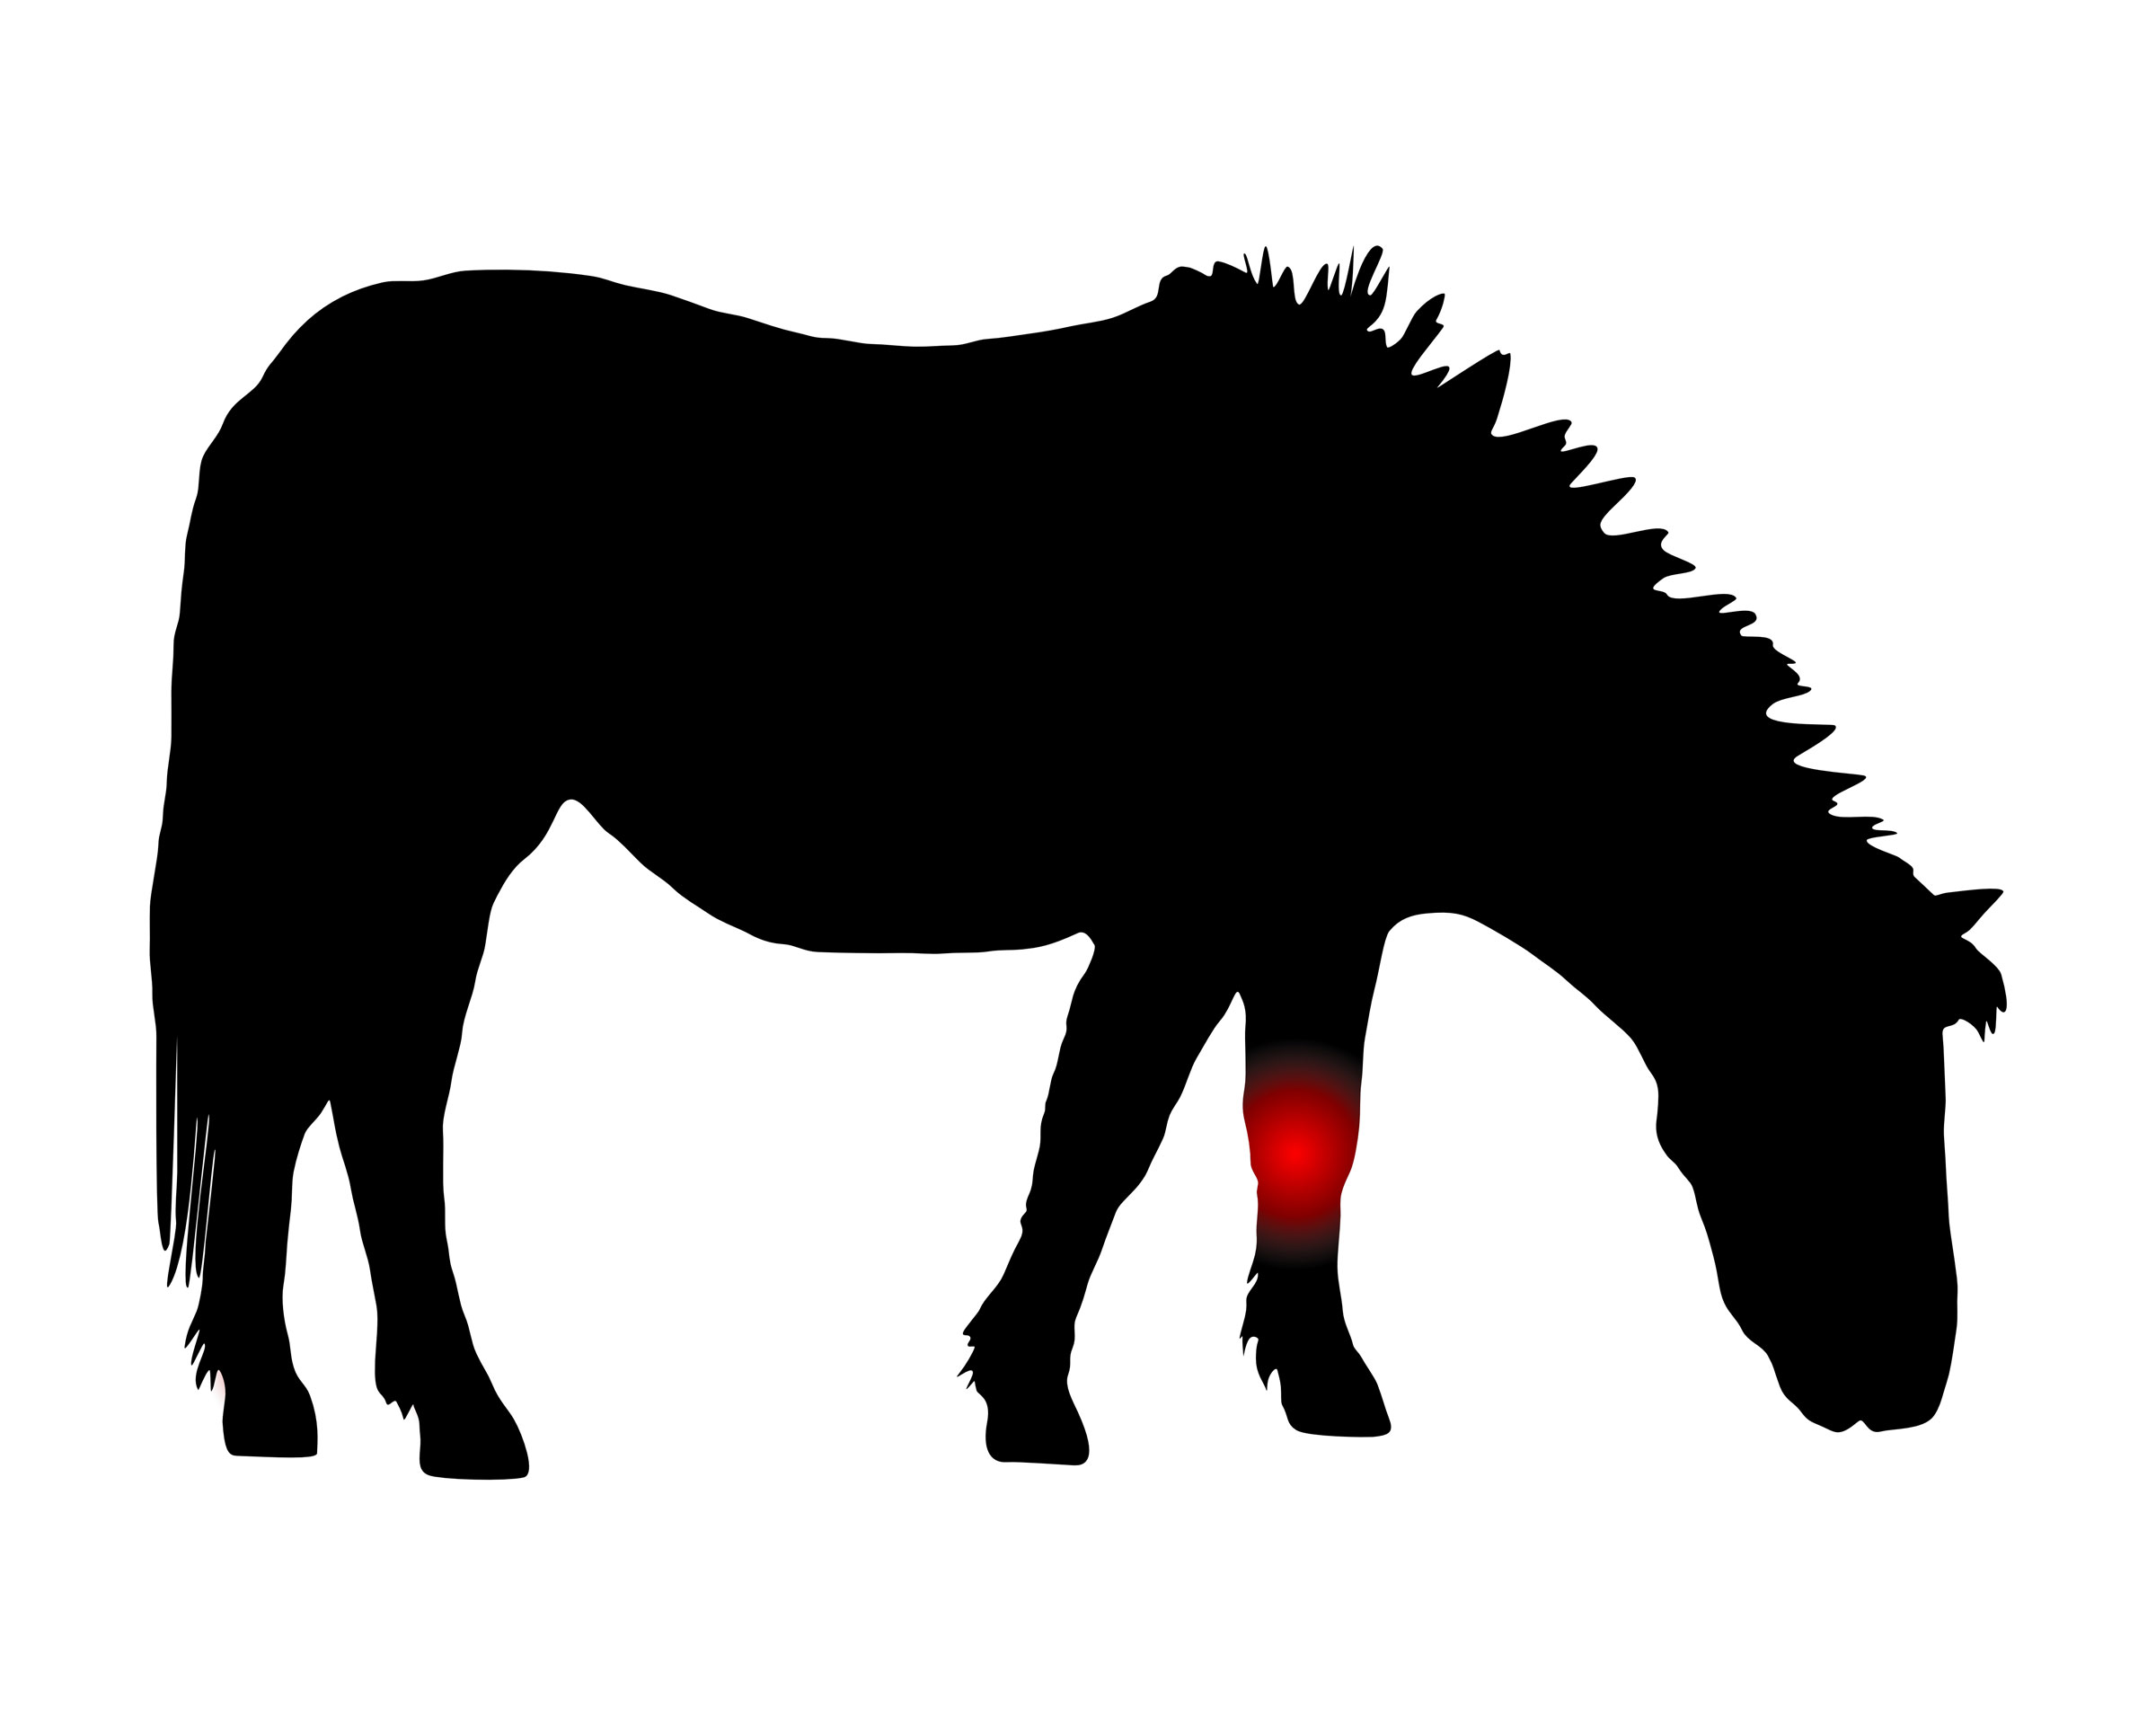 illus black horse knee pain